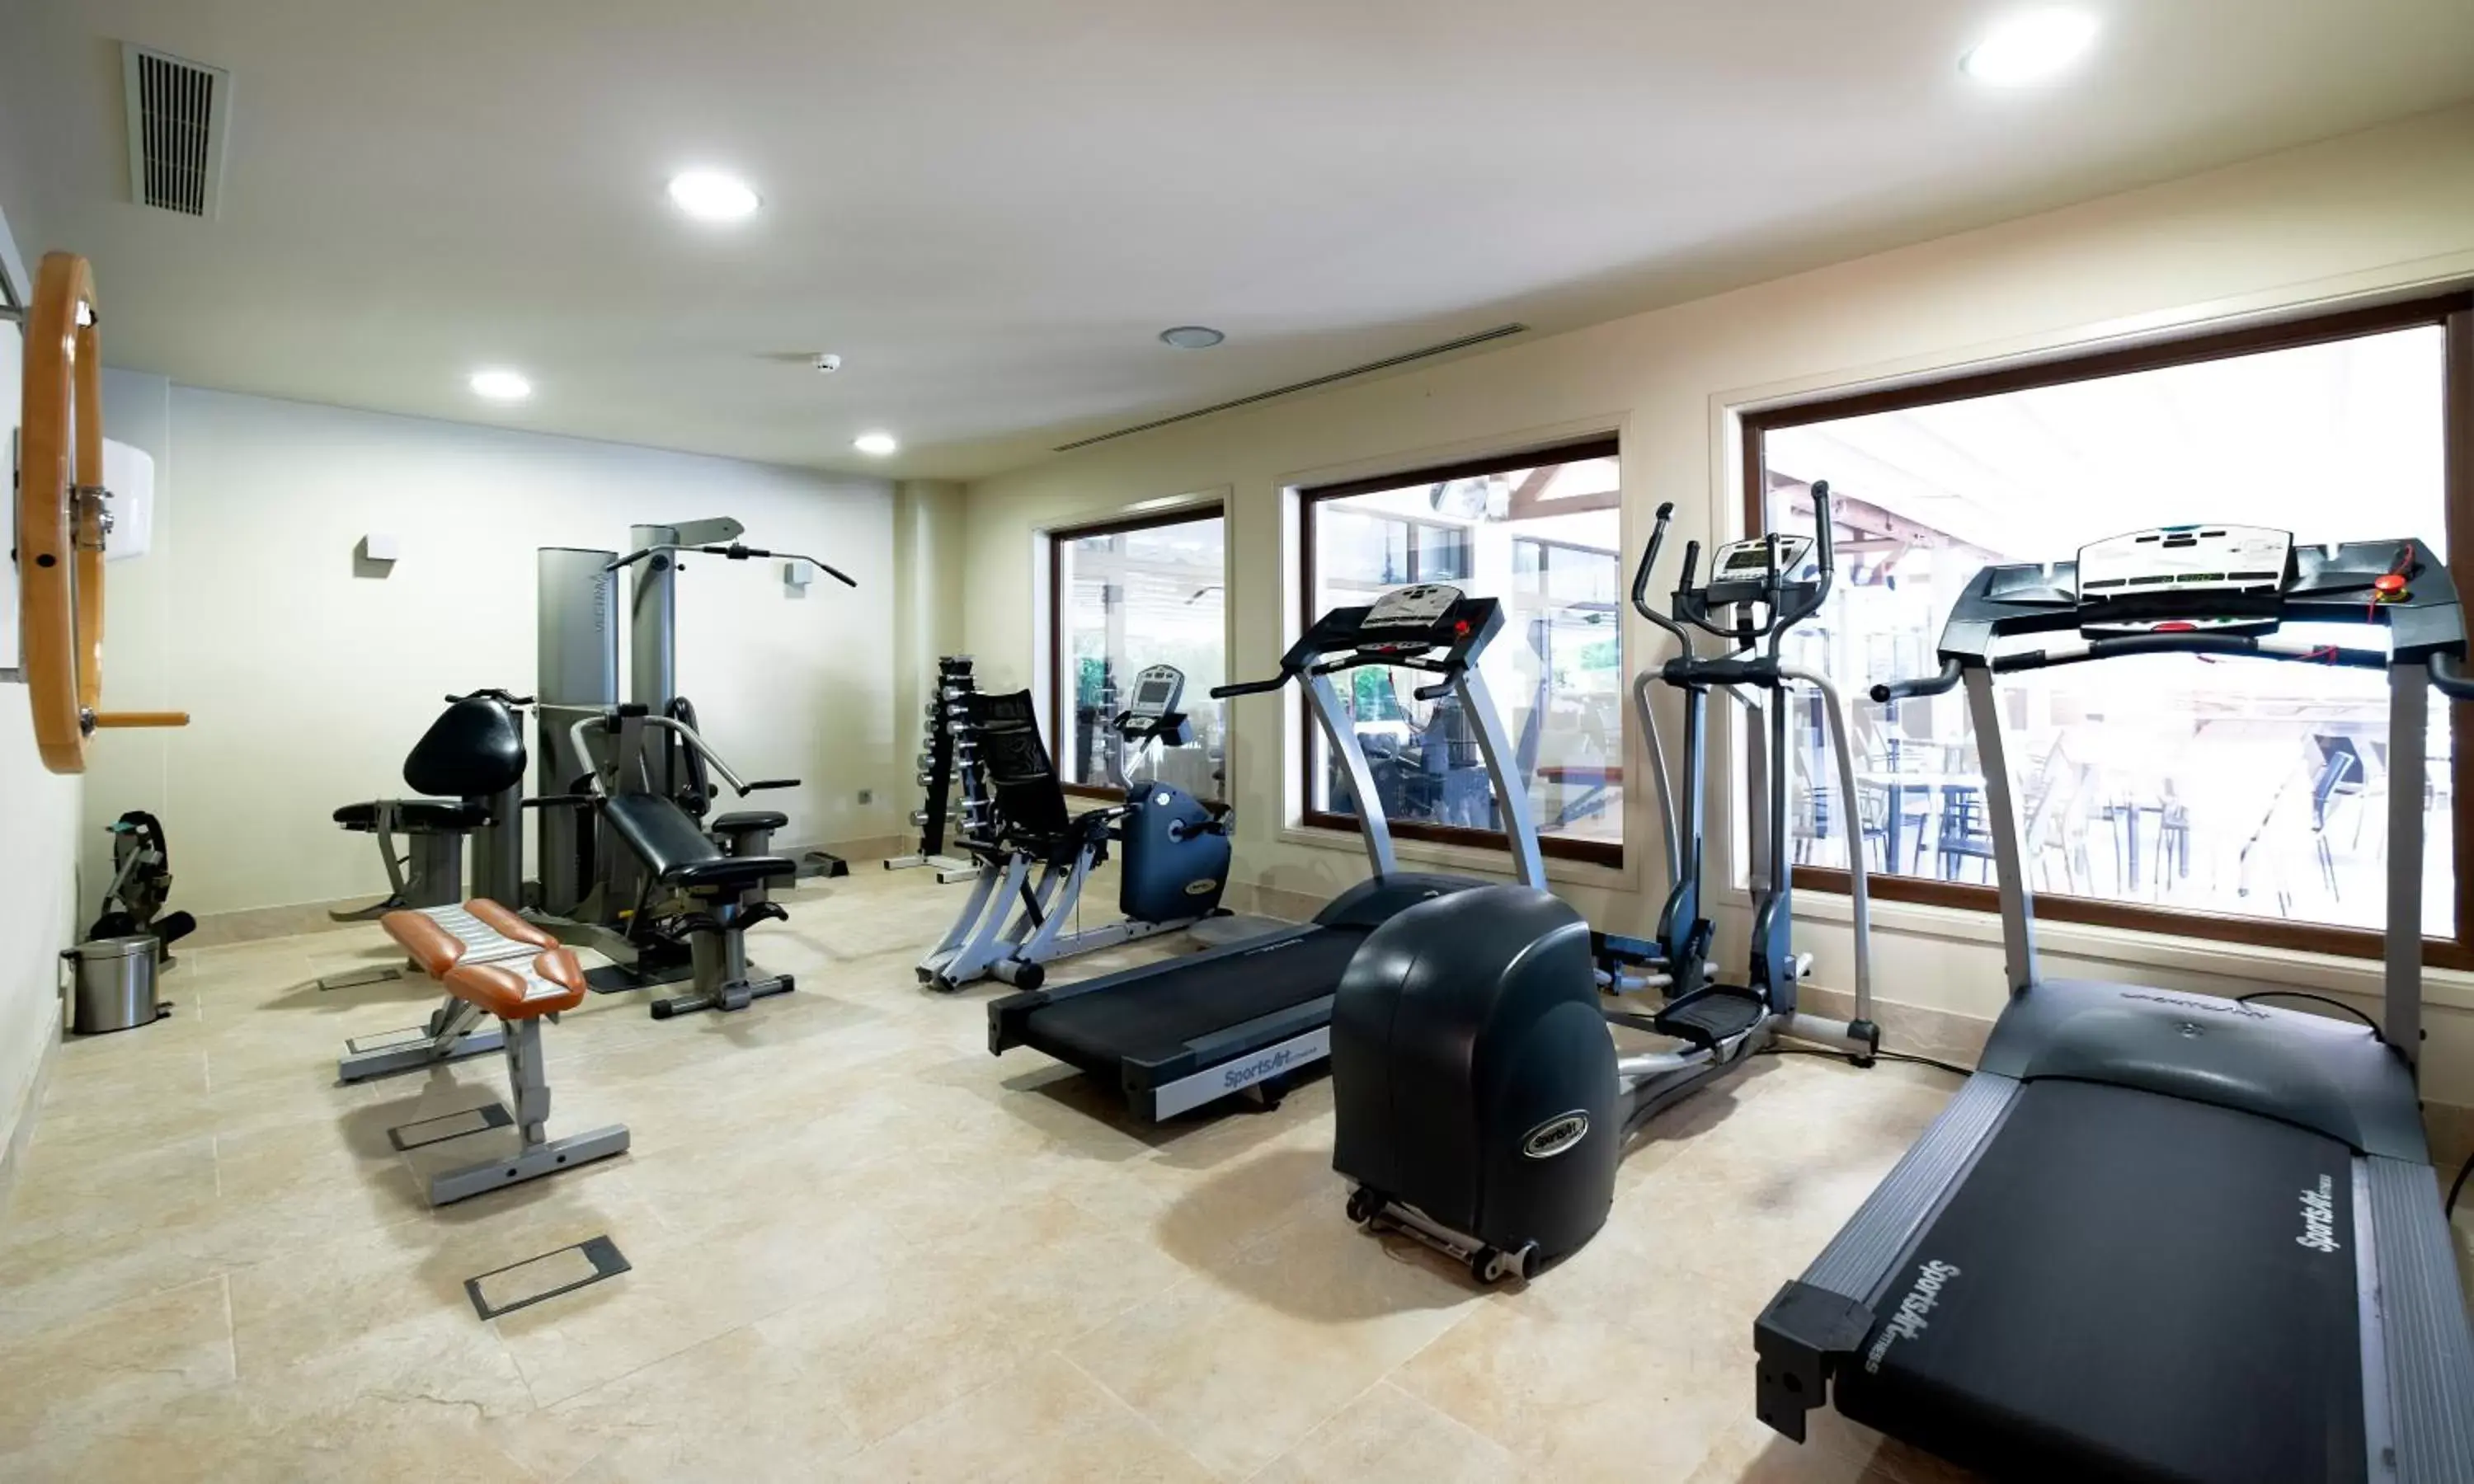 Fitness centre/facilities, Fitness Center/Facilities in Hotel Spa Attica21 Villalba